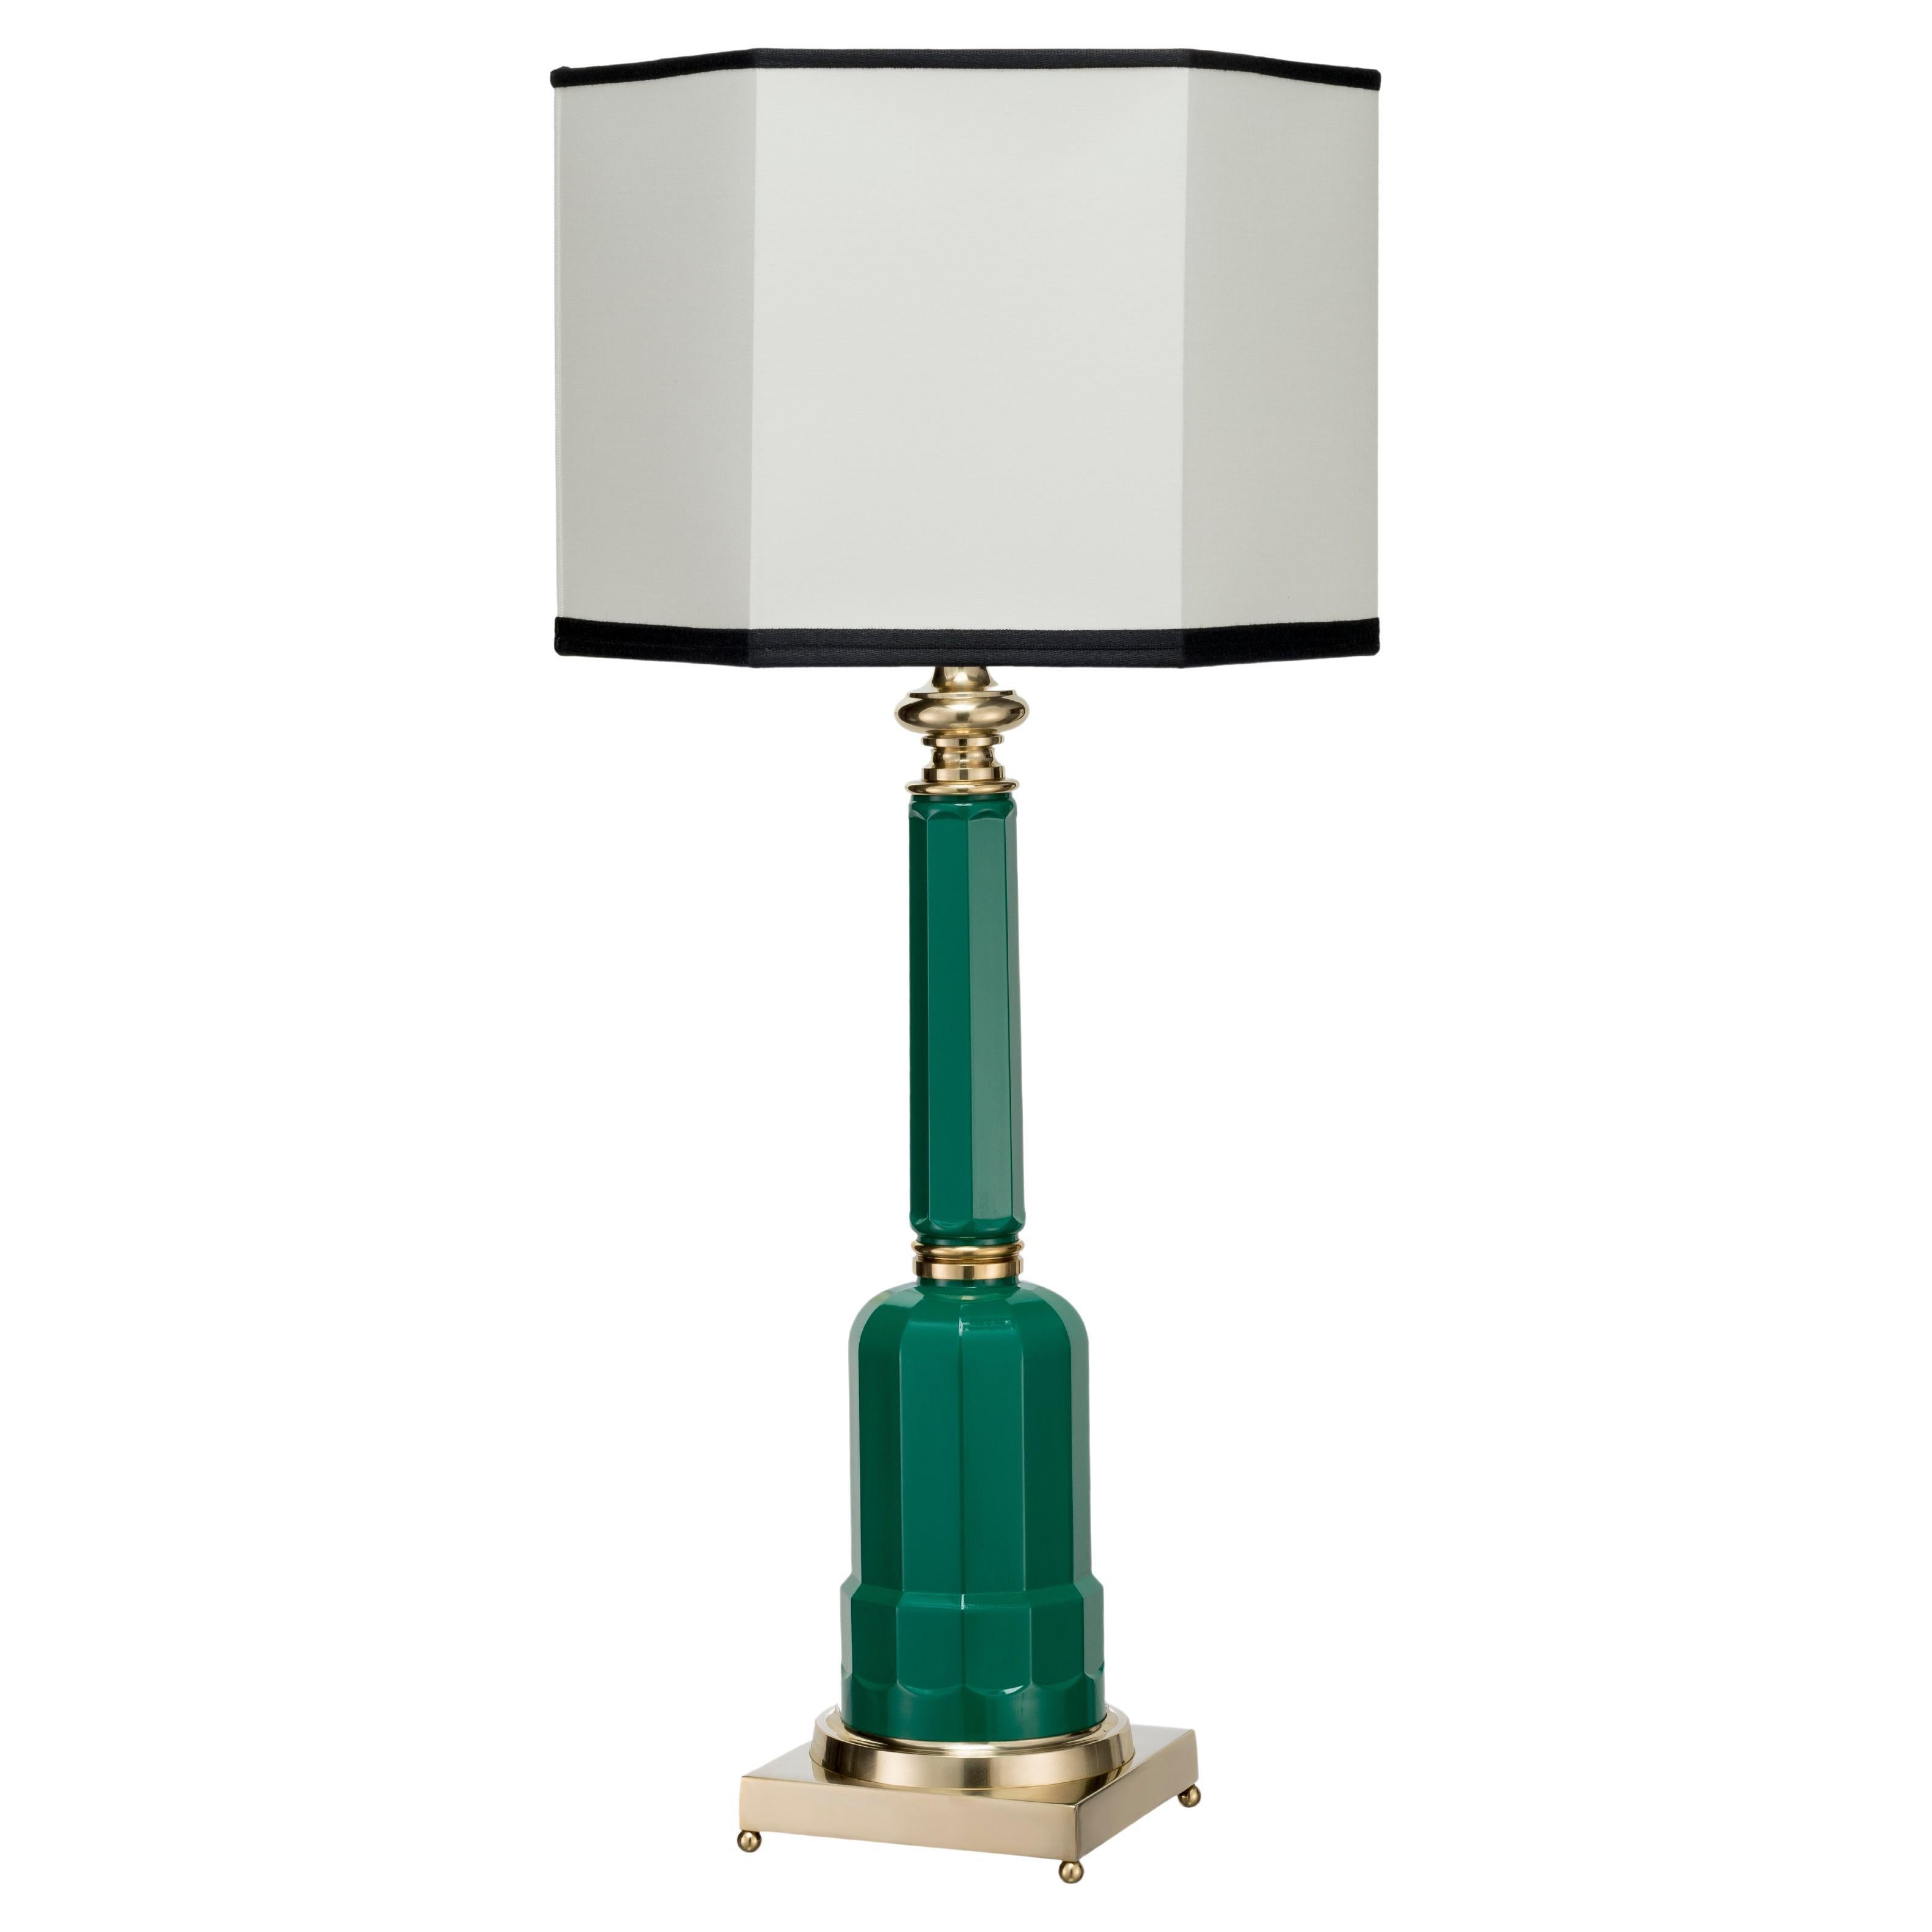 Jacaranda turquoise green table lamp For Sale